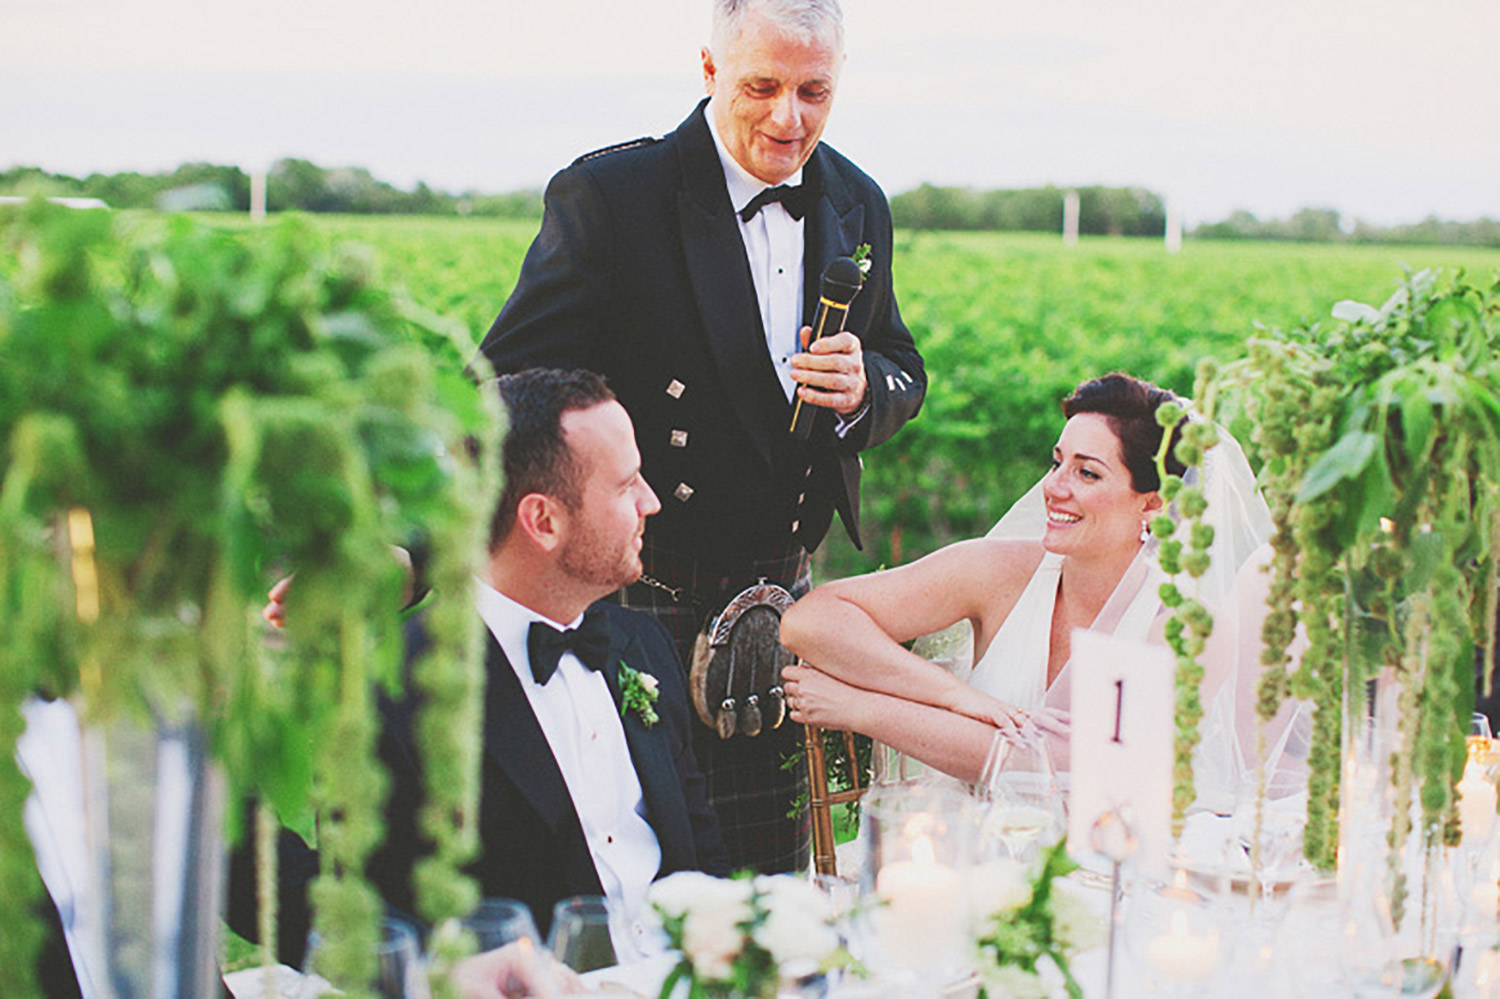 Stratus-Vineyards-Wedding-Vineyard-Bride-Photo-By-Reed-Photography-053.jpg